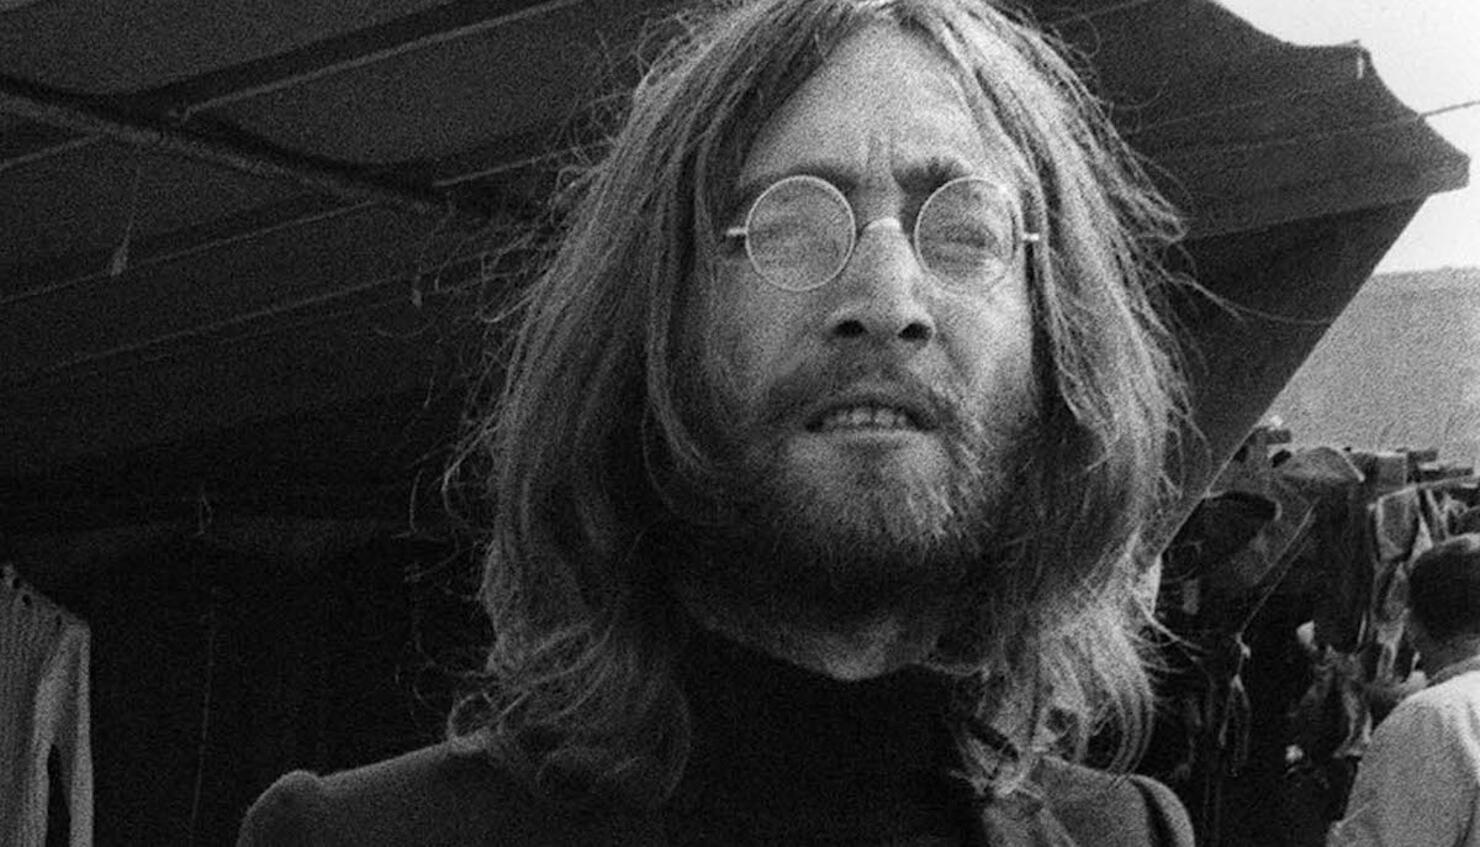 Bullet From The Gun That Killed John Lennon Is Going Up For Auction ...